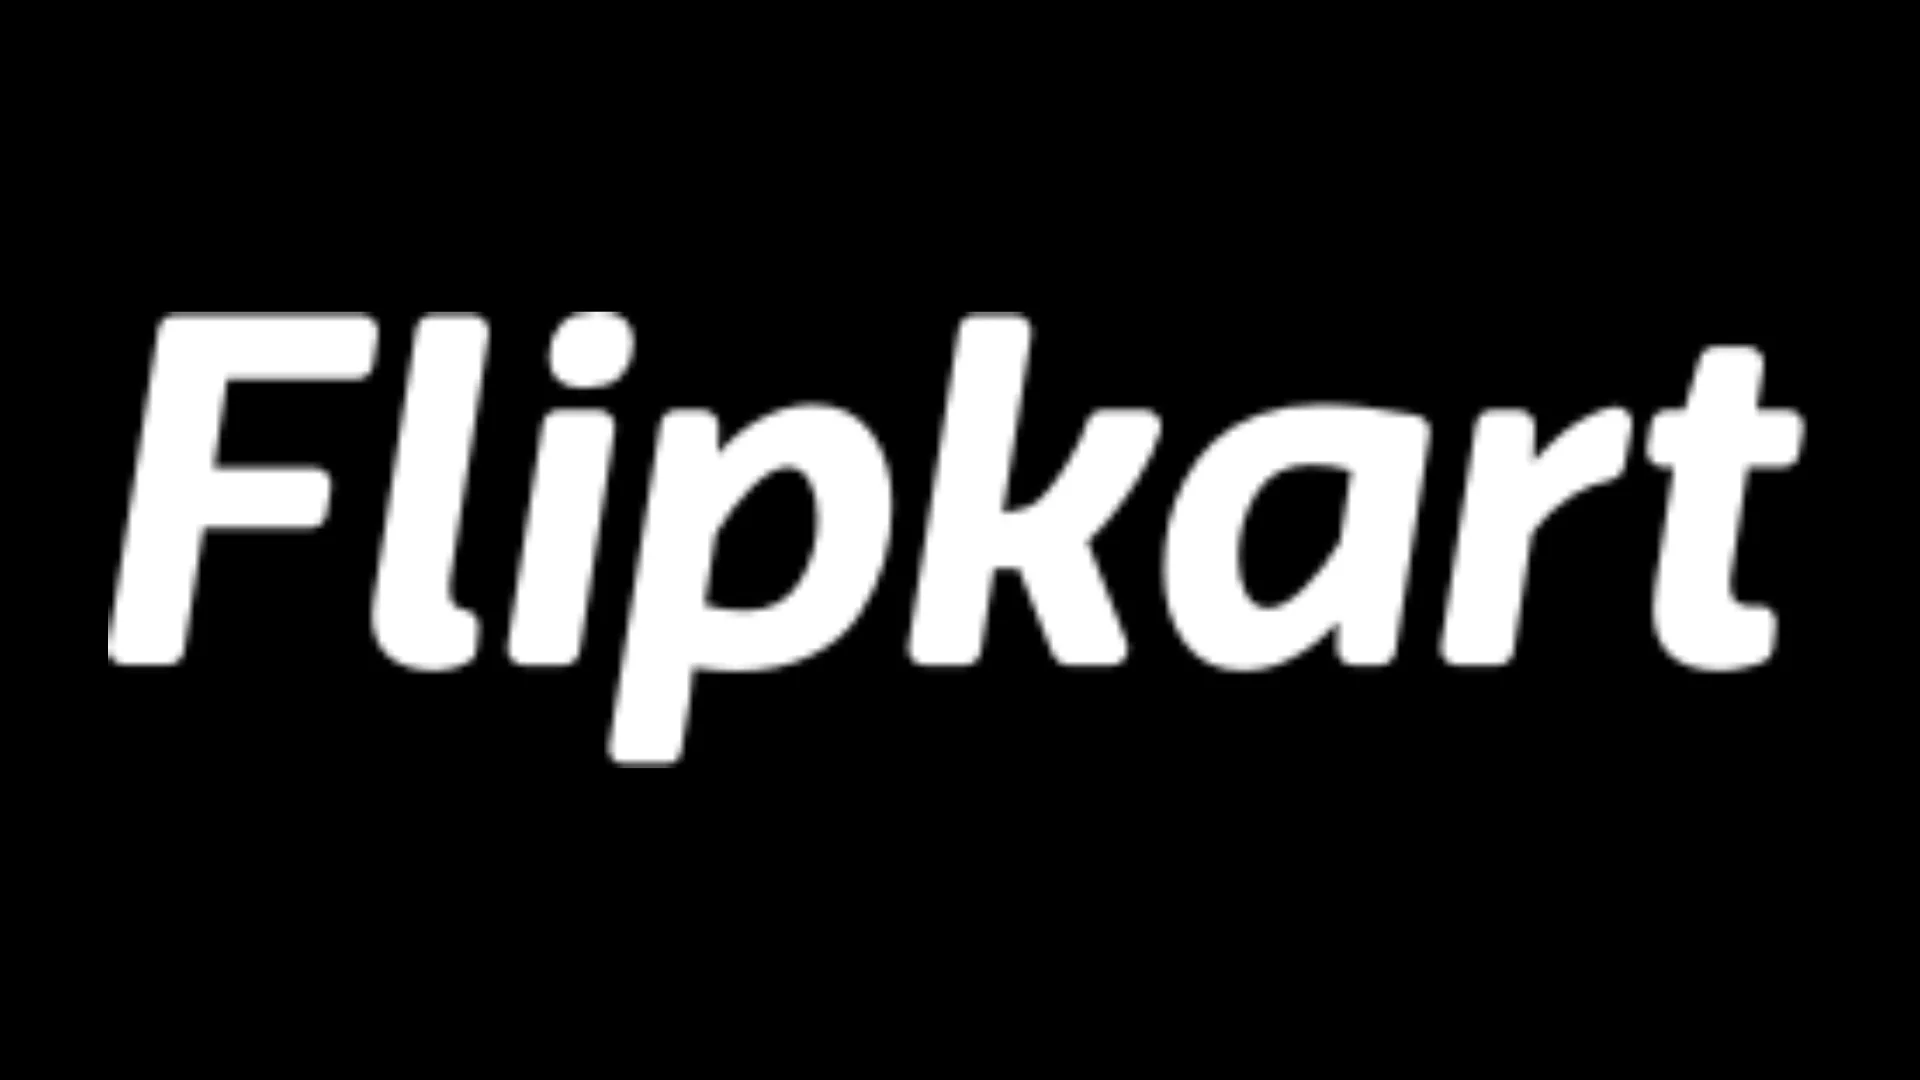 Flipkart Logo, symbol, meaning, history, PNG, brand